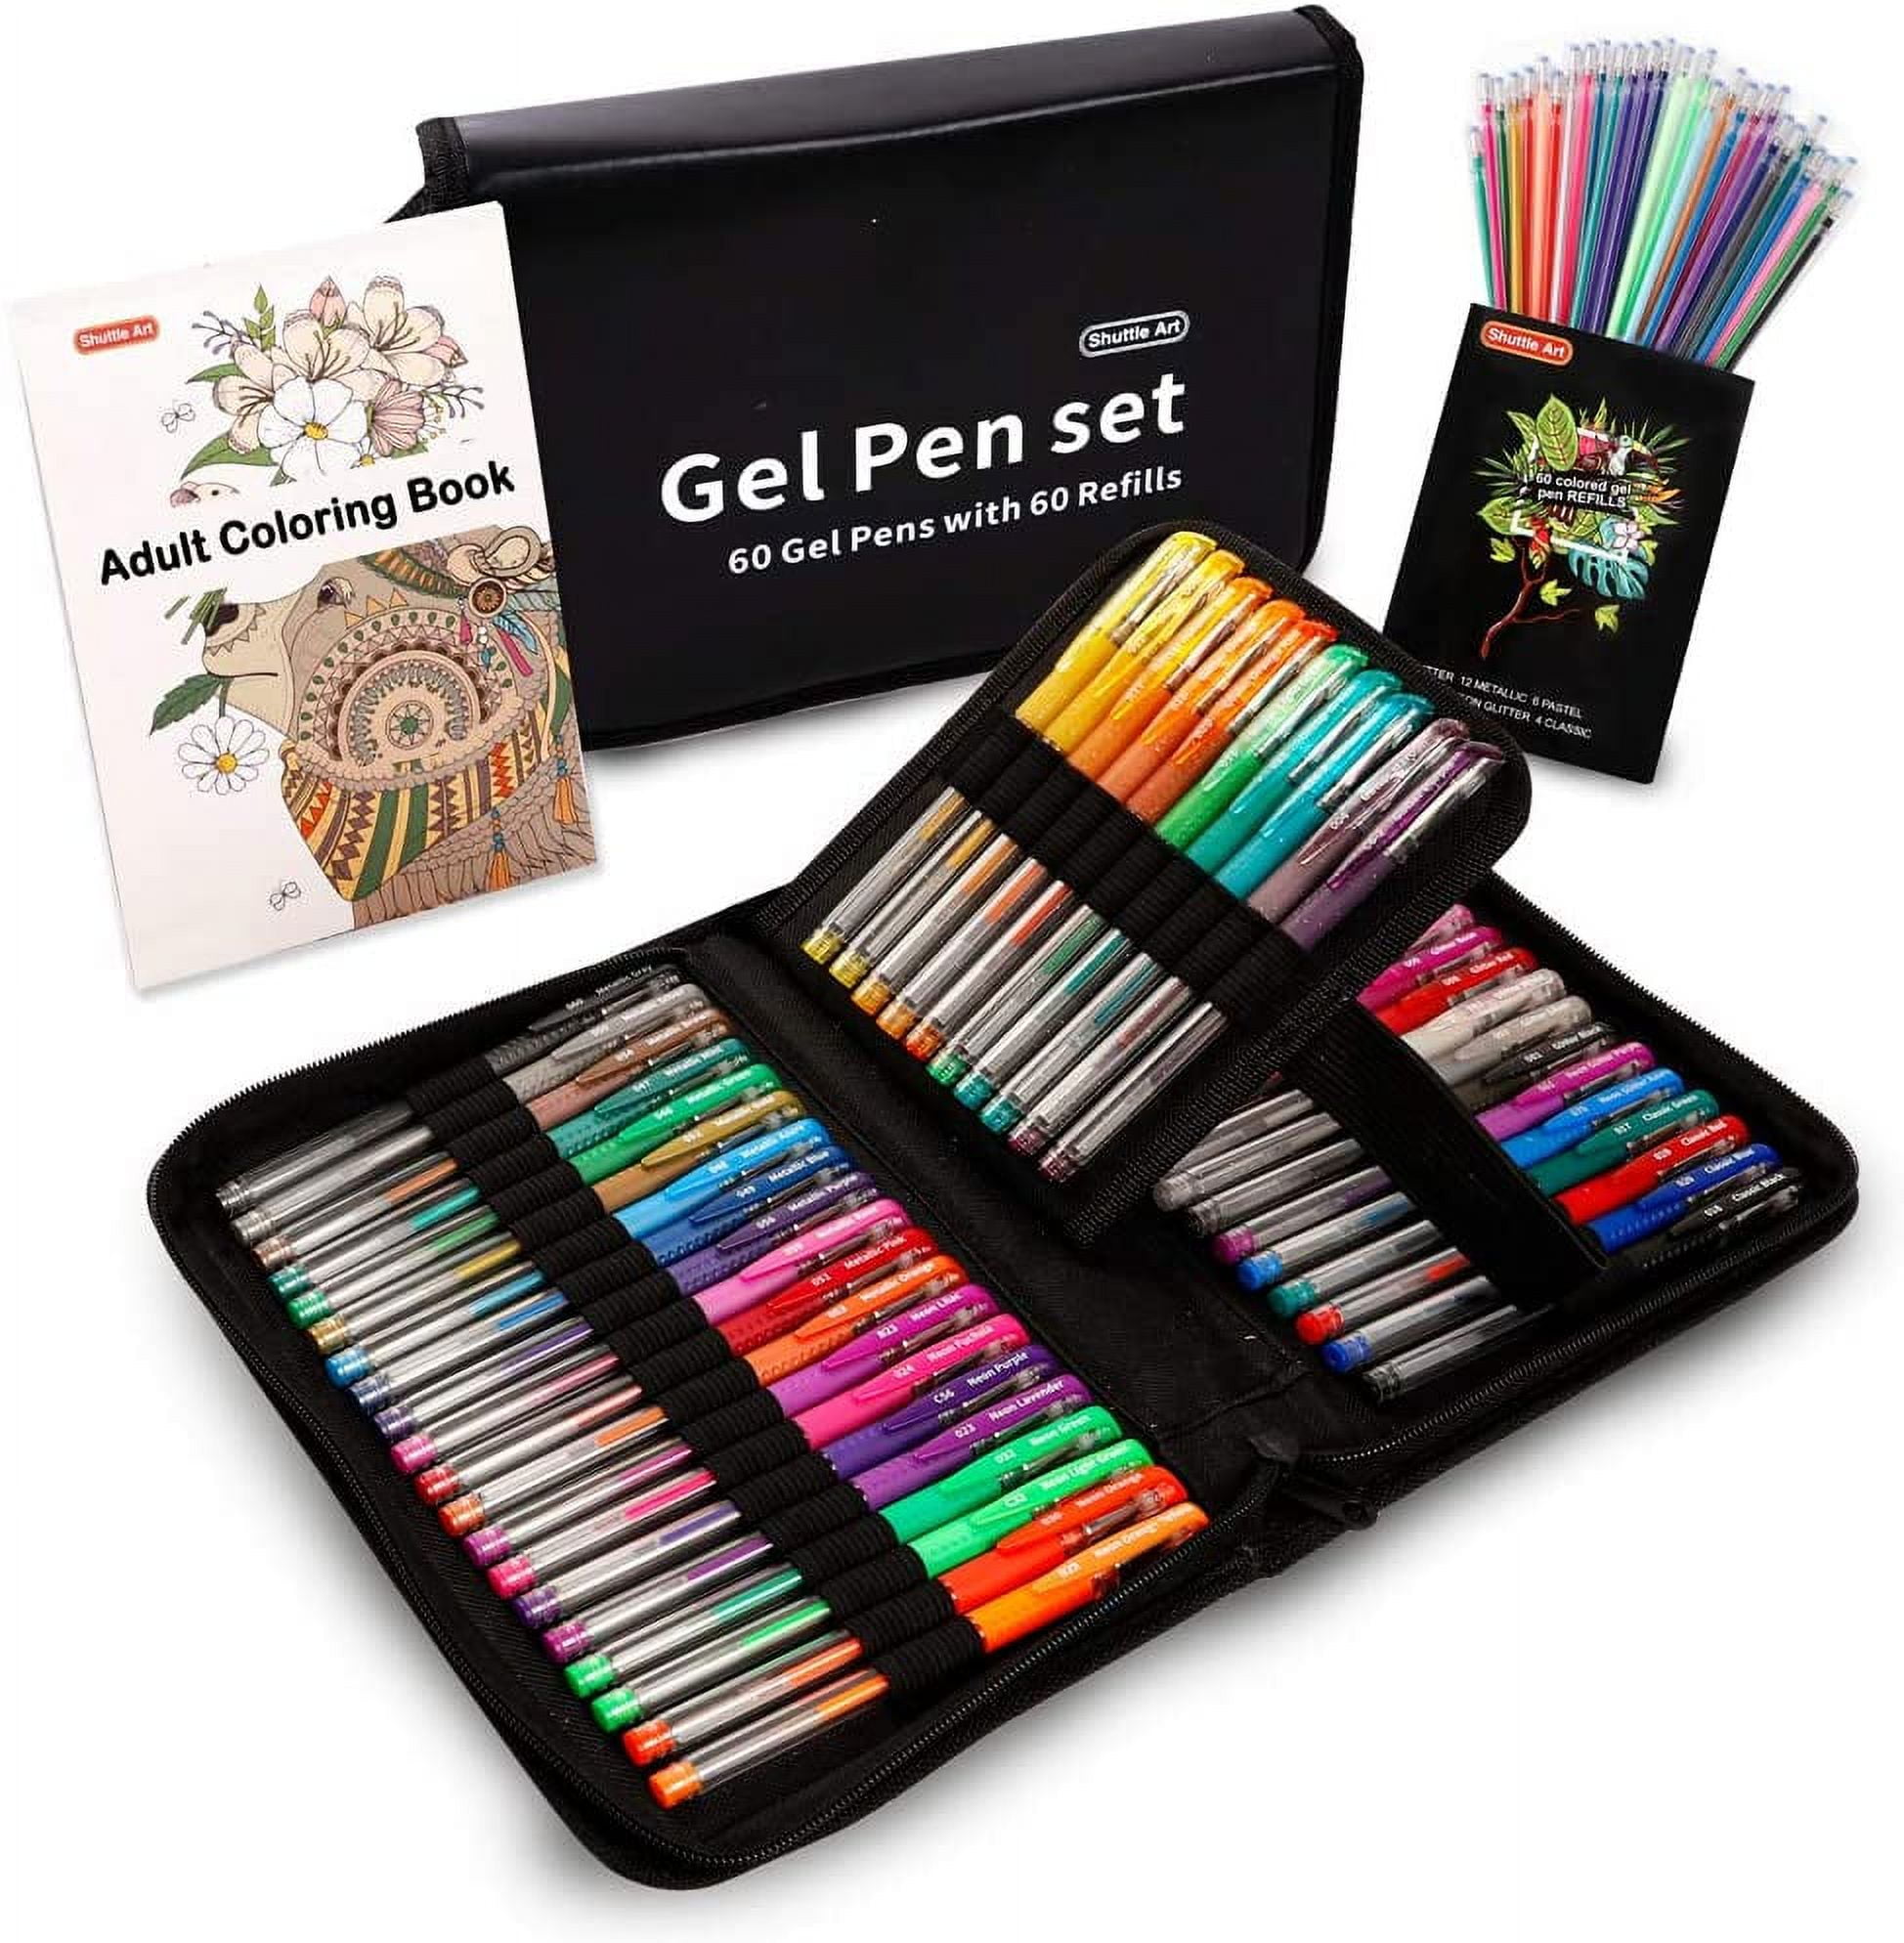 Shuttle Art Gel Pens, 120 Pack Gel Pen Set 60 Colored Gel Pen with 60 Refills for Adults Coloring Books Drawing Doodling Crafts Scrapbooking